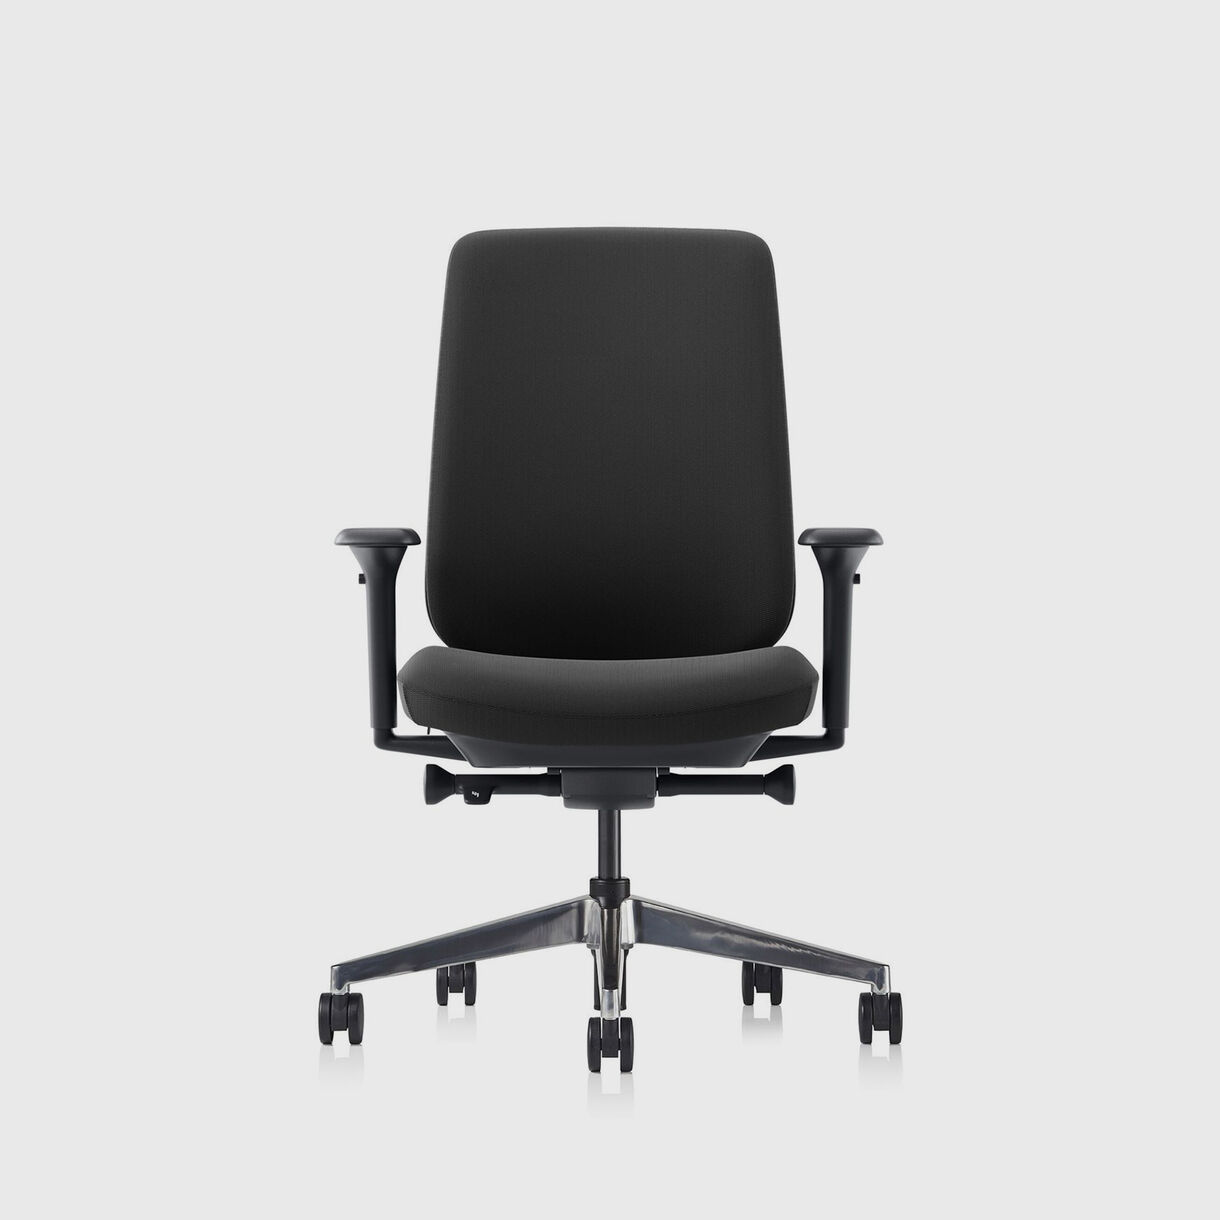 Verus Upholstered Back Task Chair - Black Frame & Bayou Upholstery - Fully Adjustable Arms